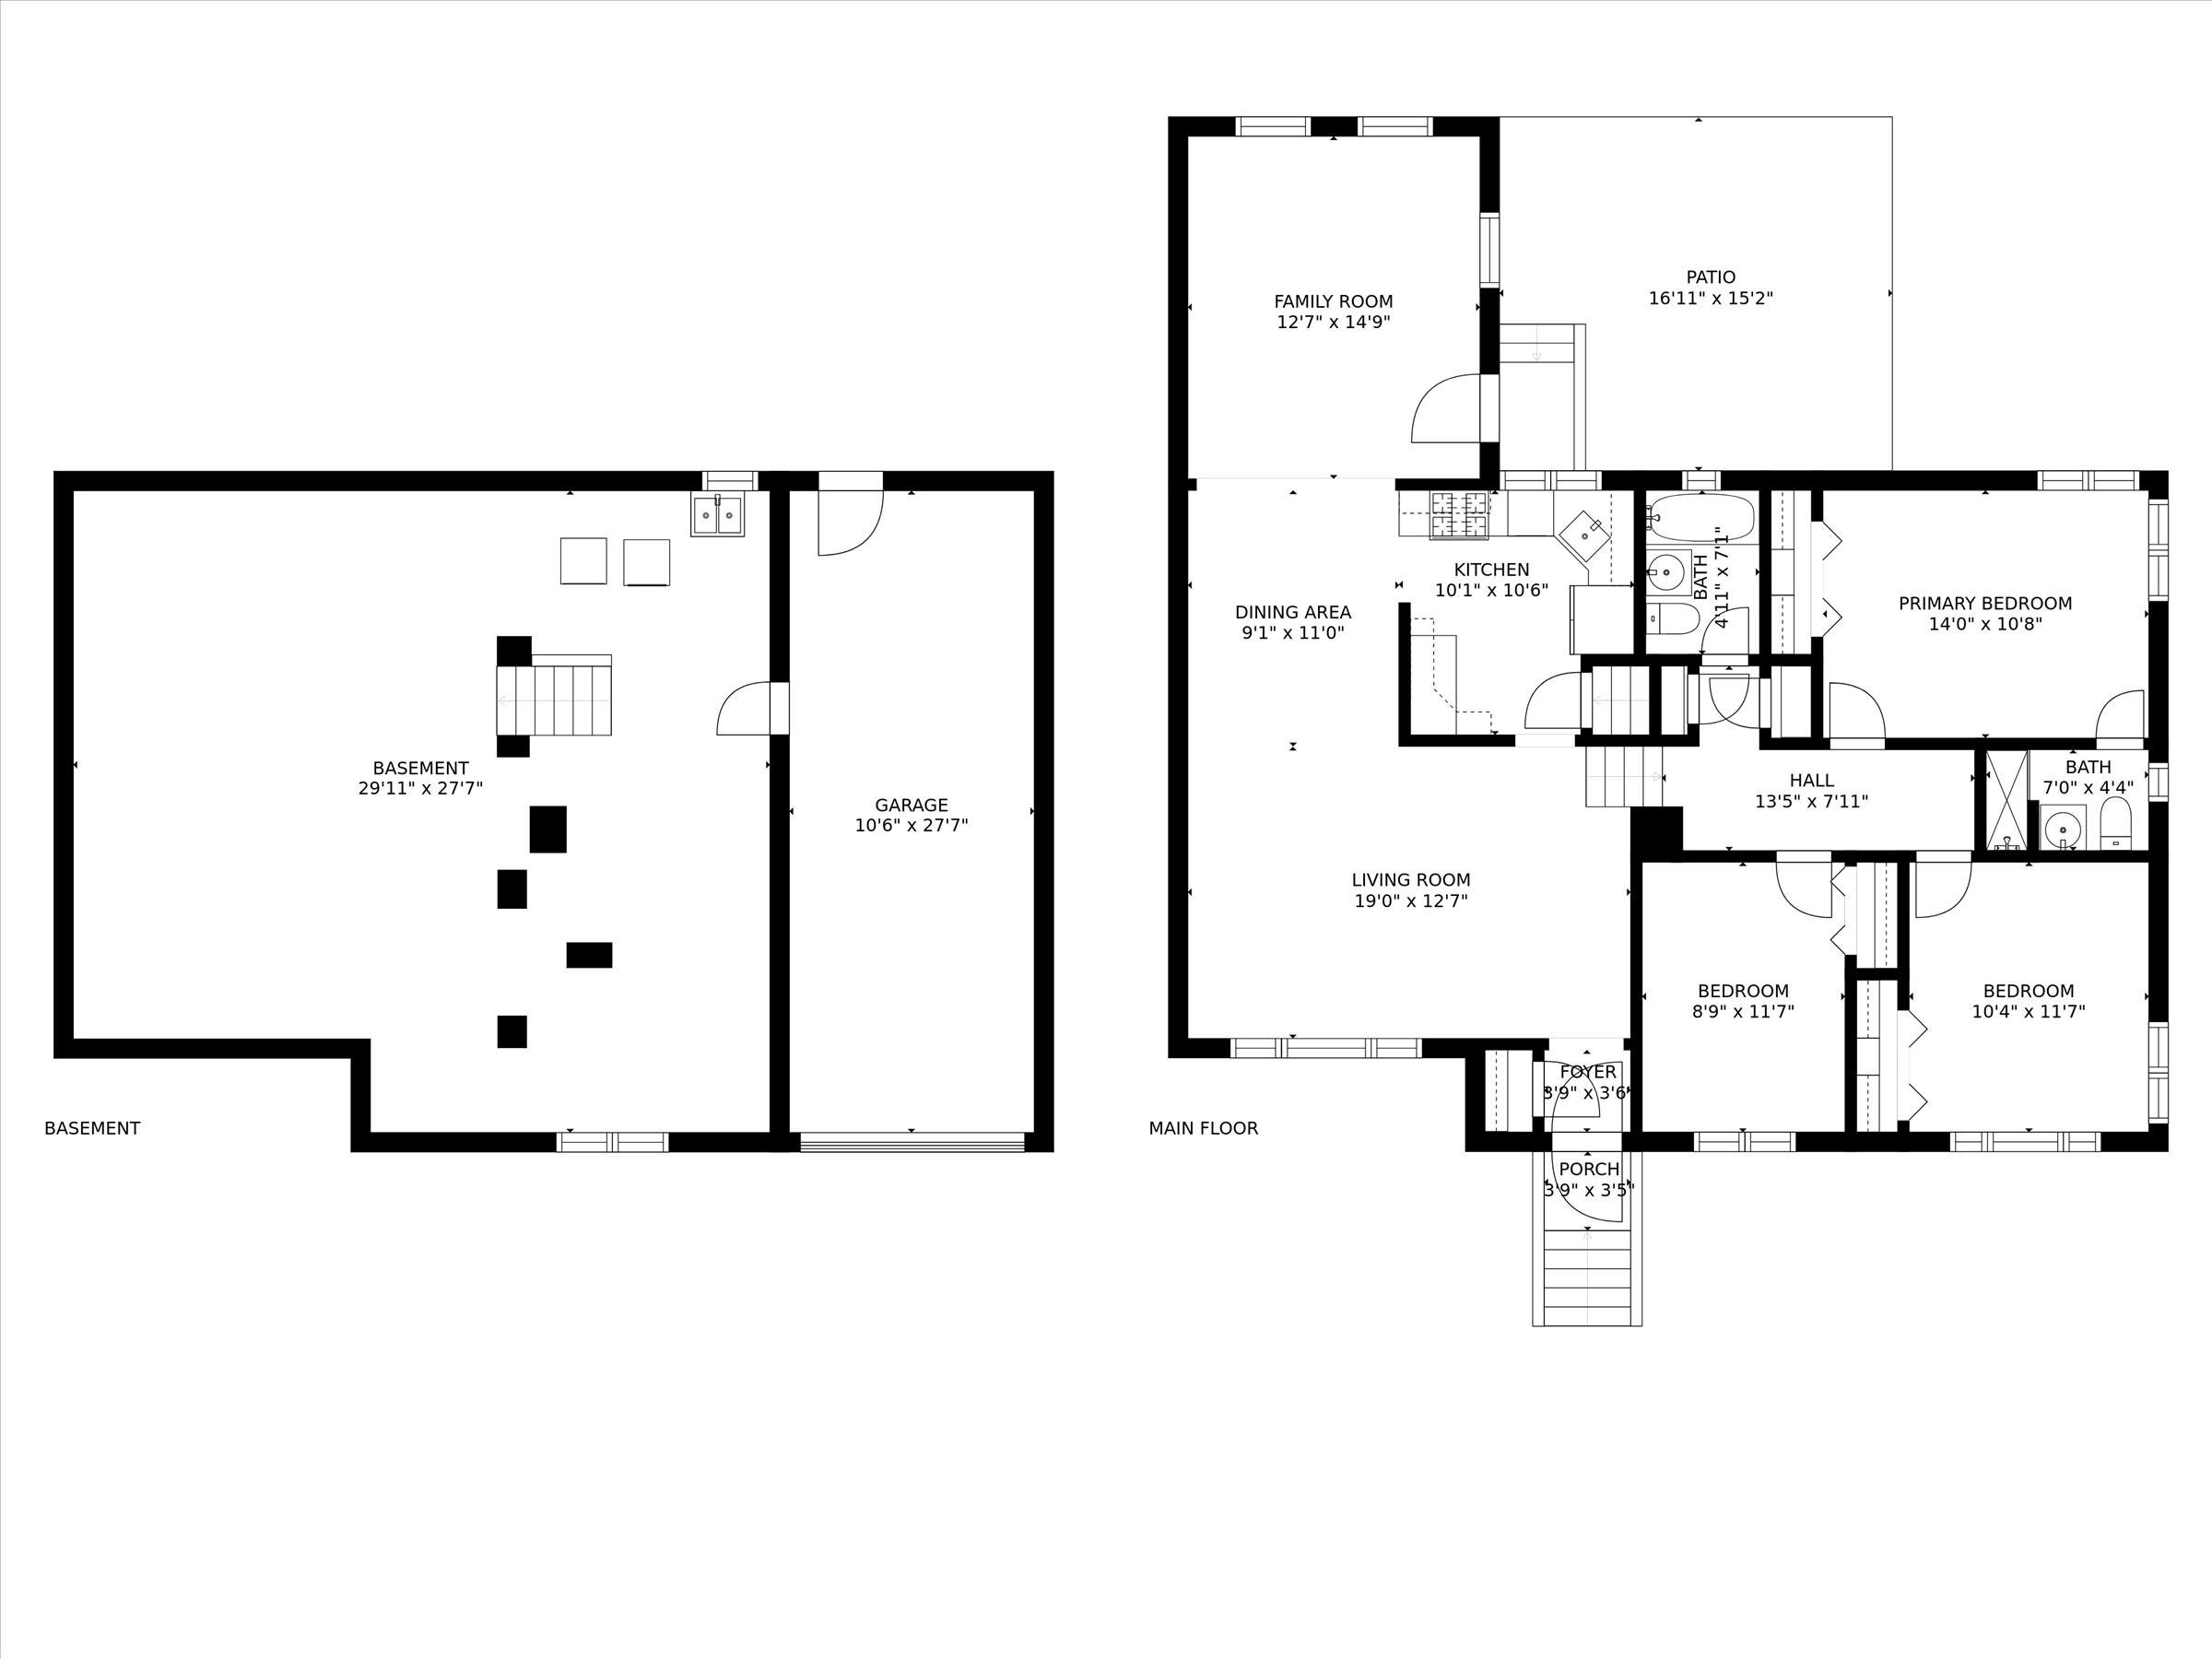 10 Rutgers St - Floor Plan (1).jpg